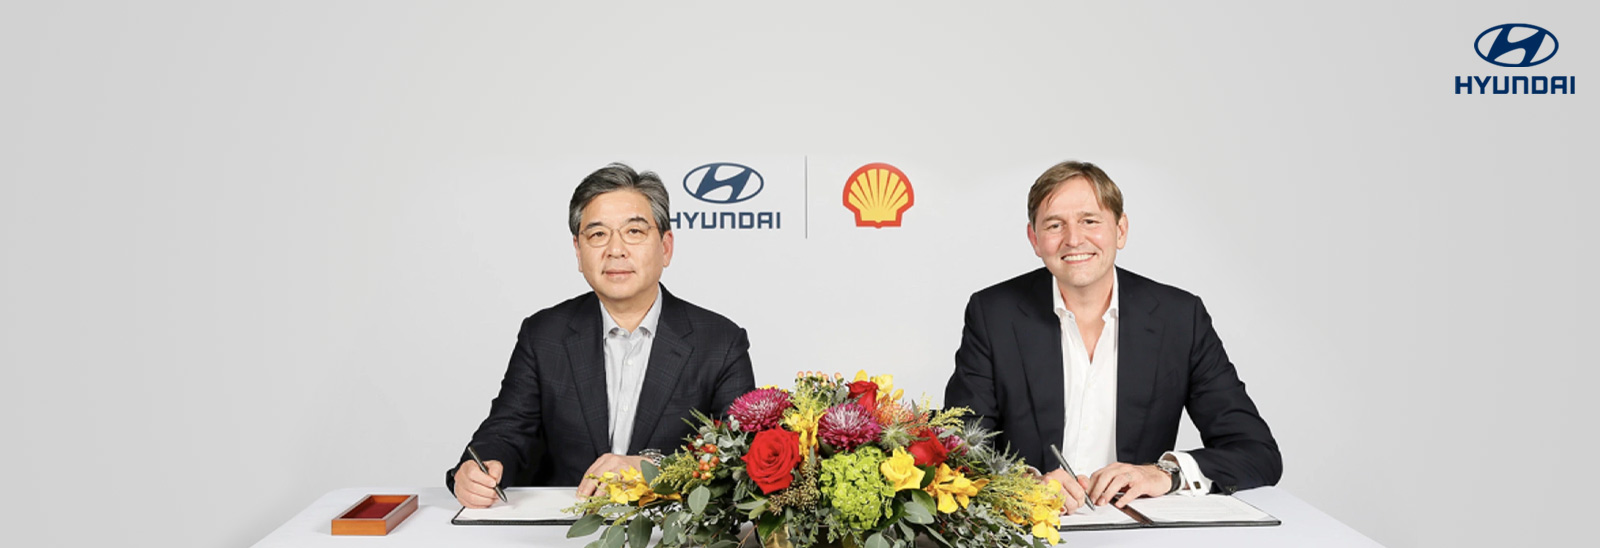 Ejecutivo de Hyundai y de Shell firmando acuerdo